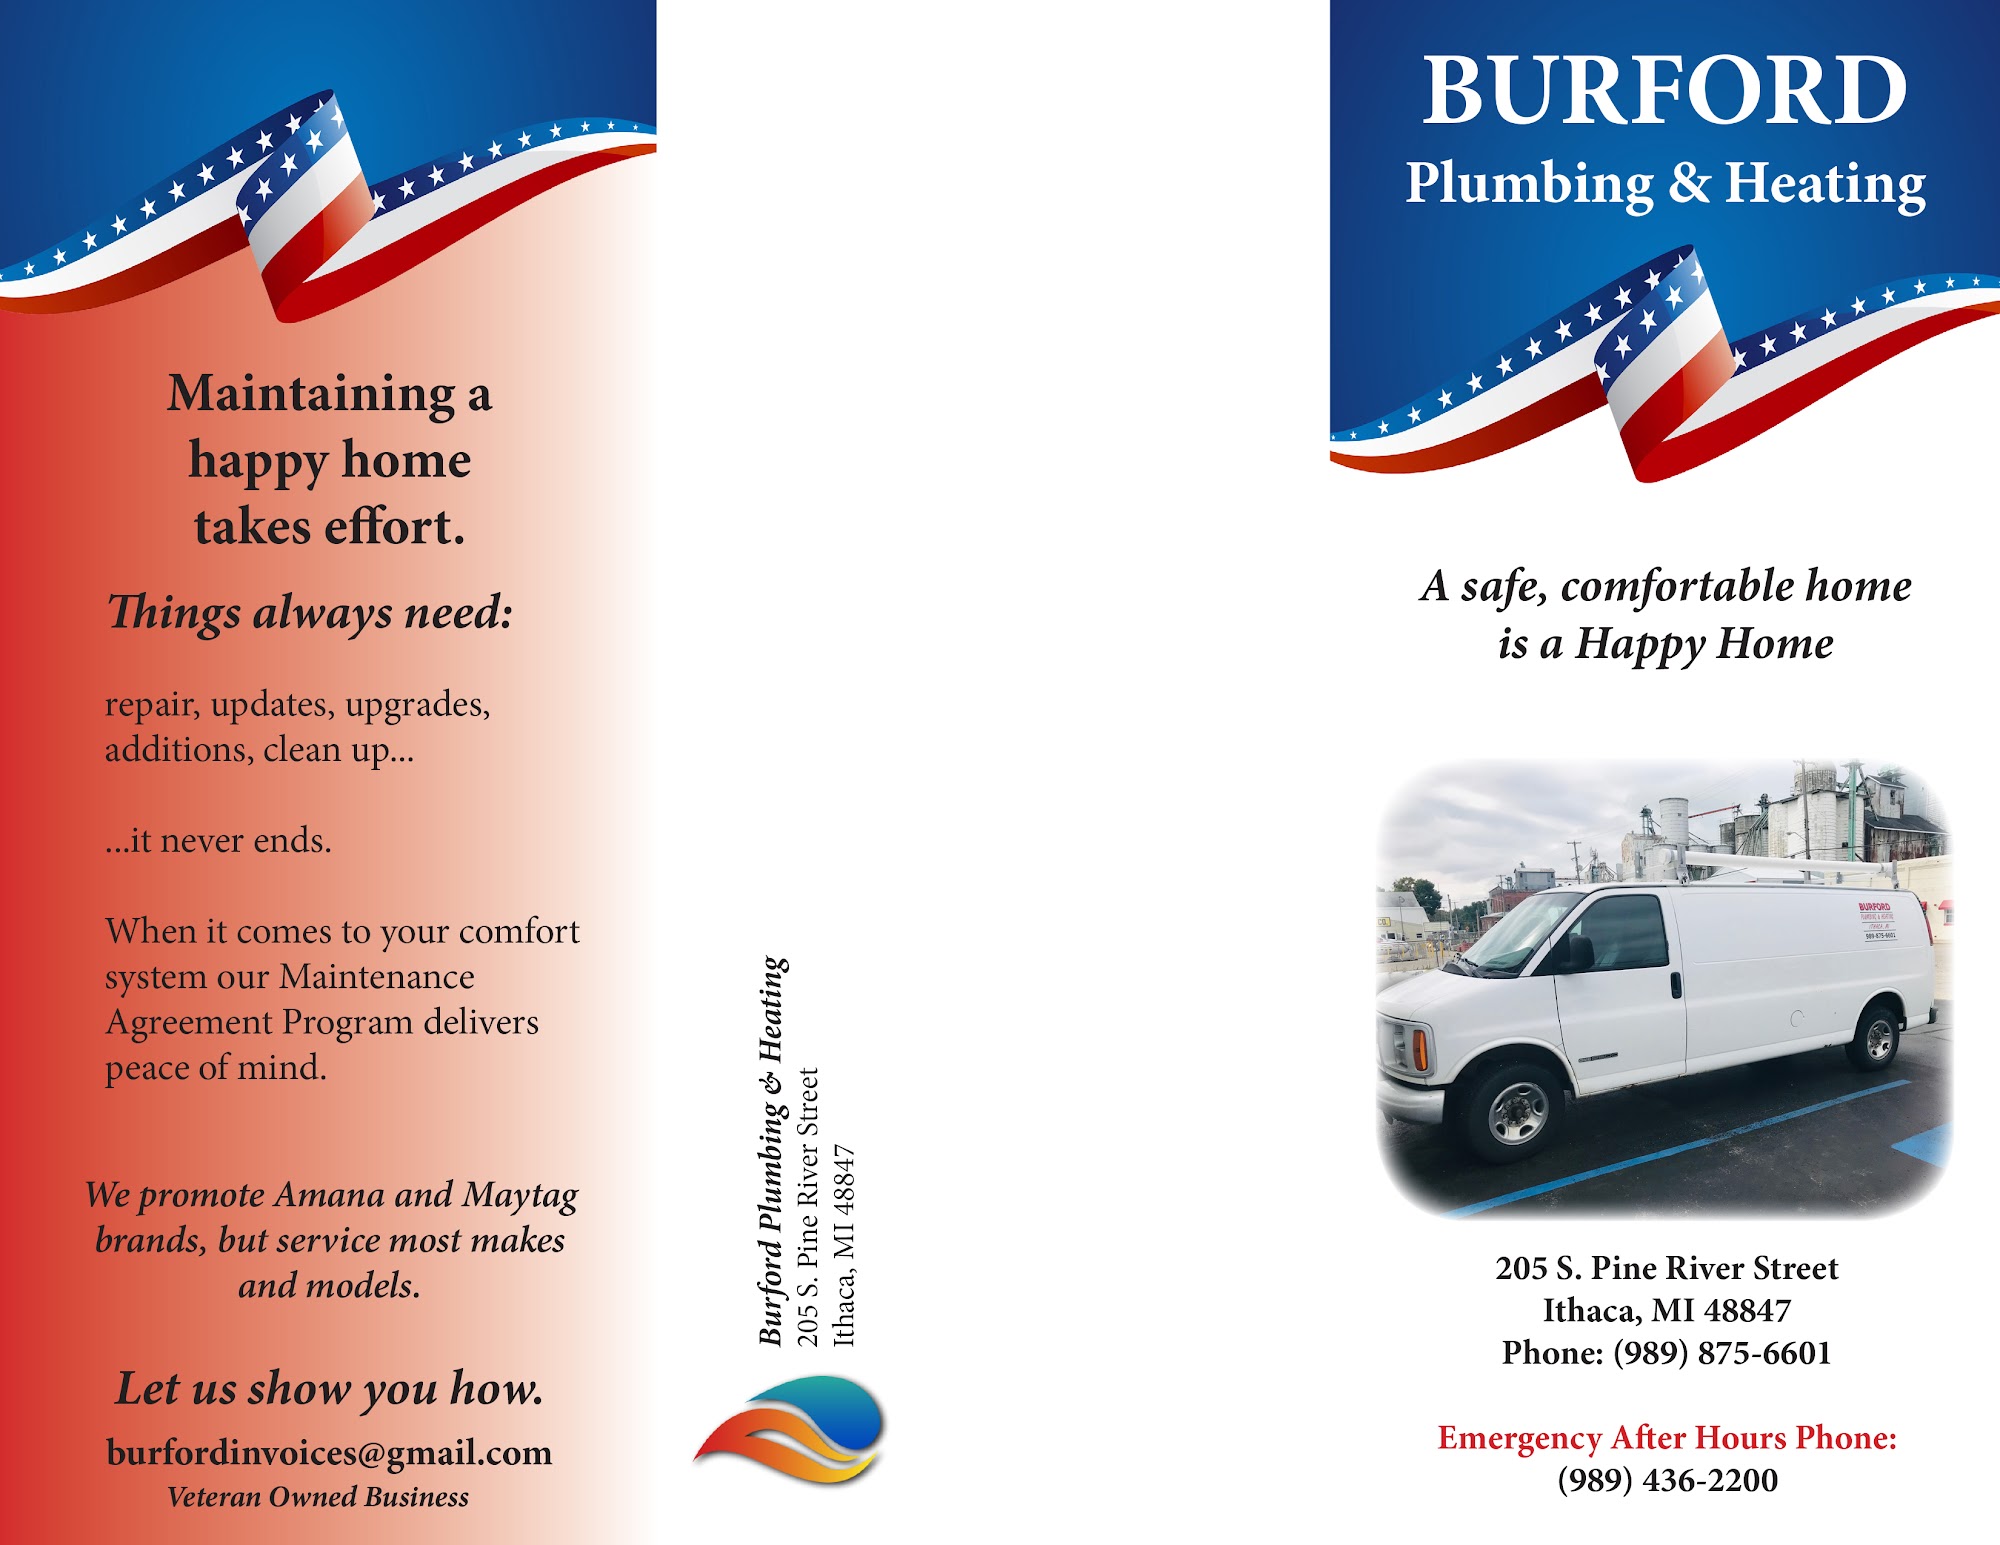 Burford Plumbing & Heating 205 S Pine River St, Ithaca Michigan 48847